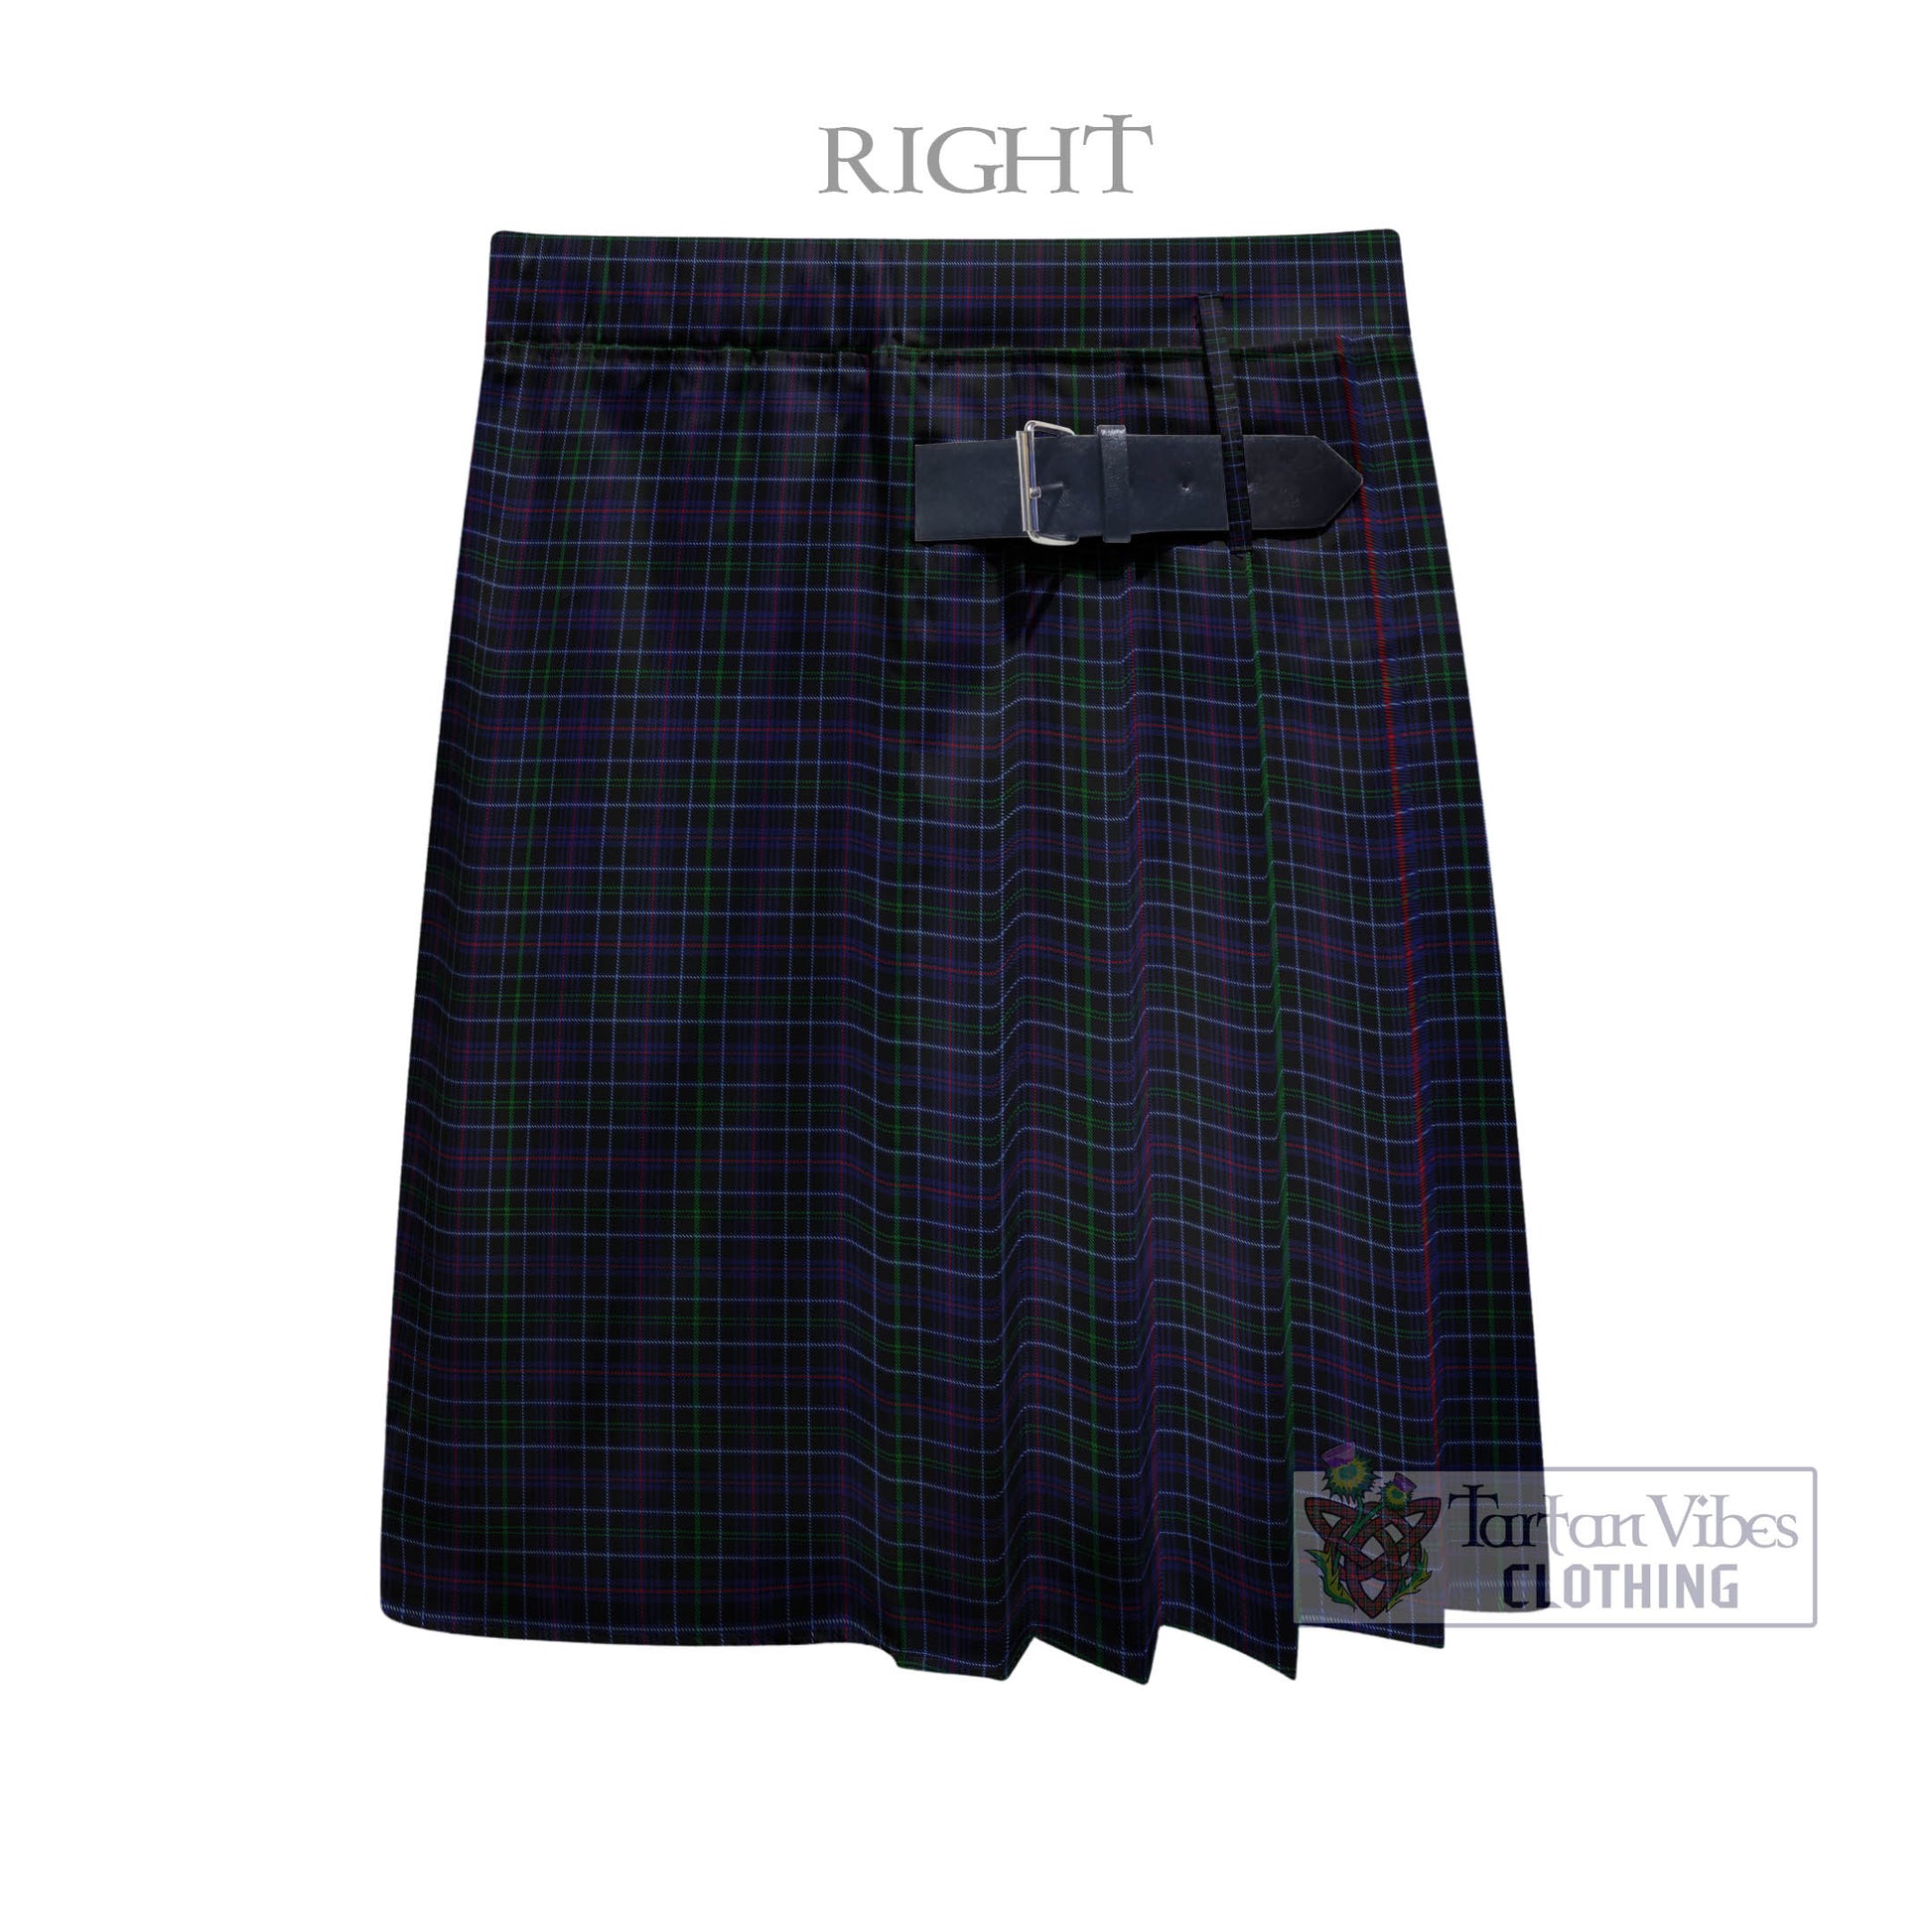 Tartan Vibes Clothing Pride (Wales) Tartan Men's Pleated Skirt - Fashion Casual Retro Scottish Style